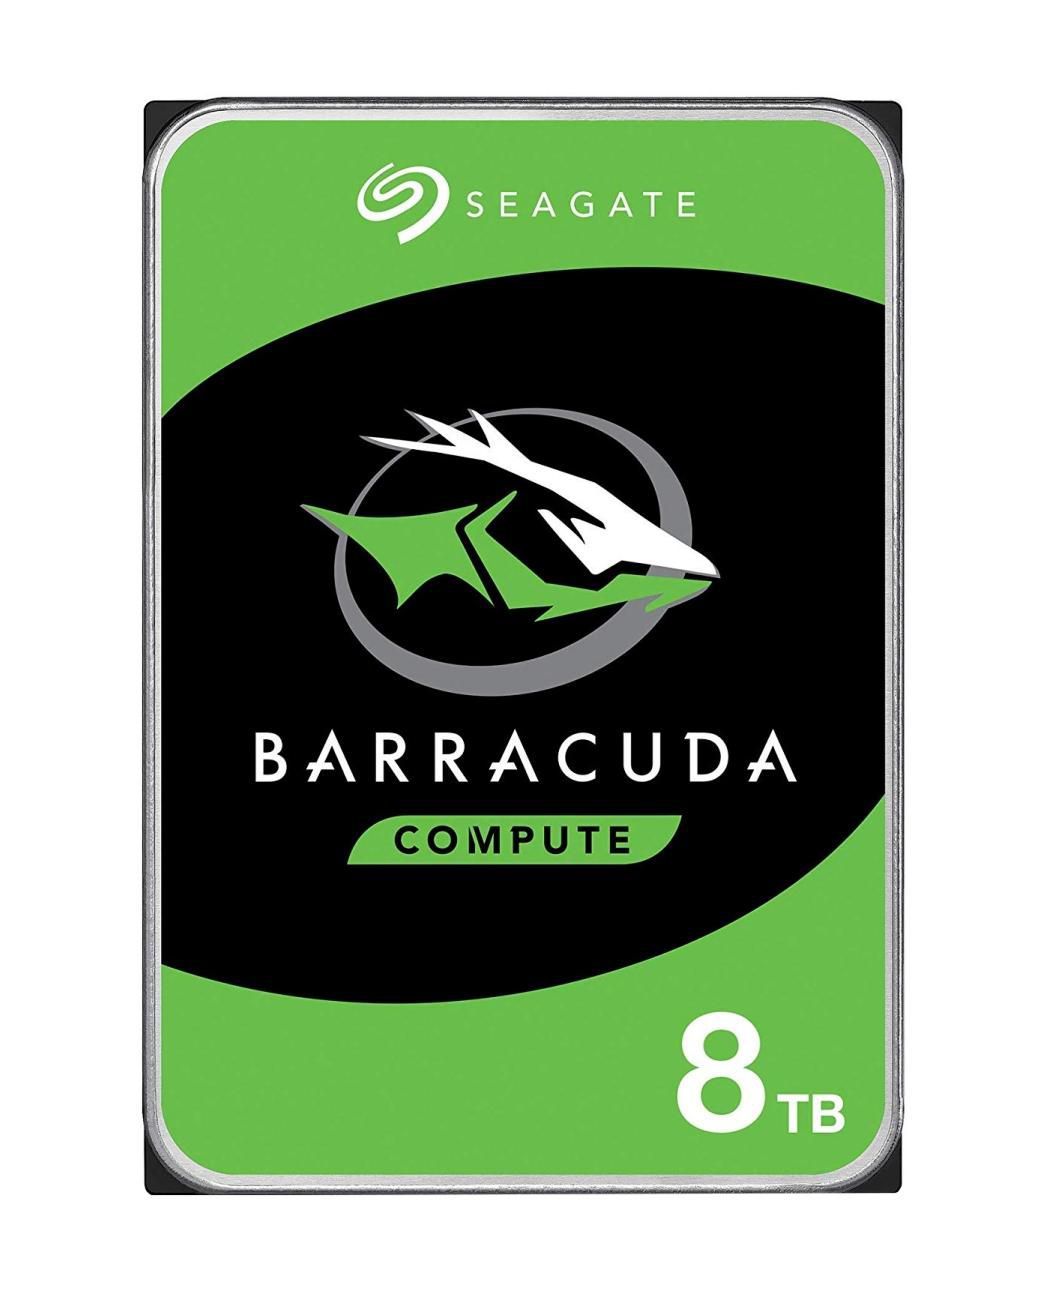 Seagate ST8000DM004 BARRACUDA 8TB SATA 